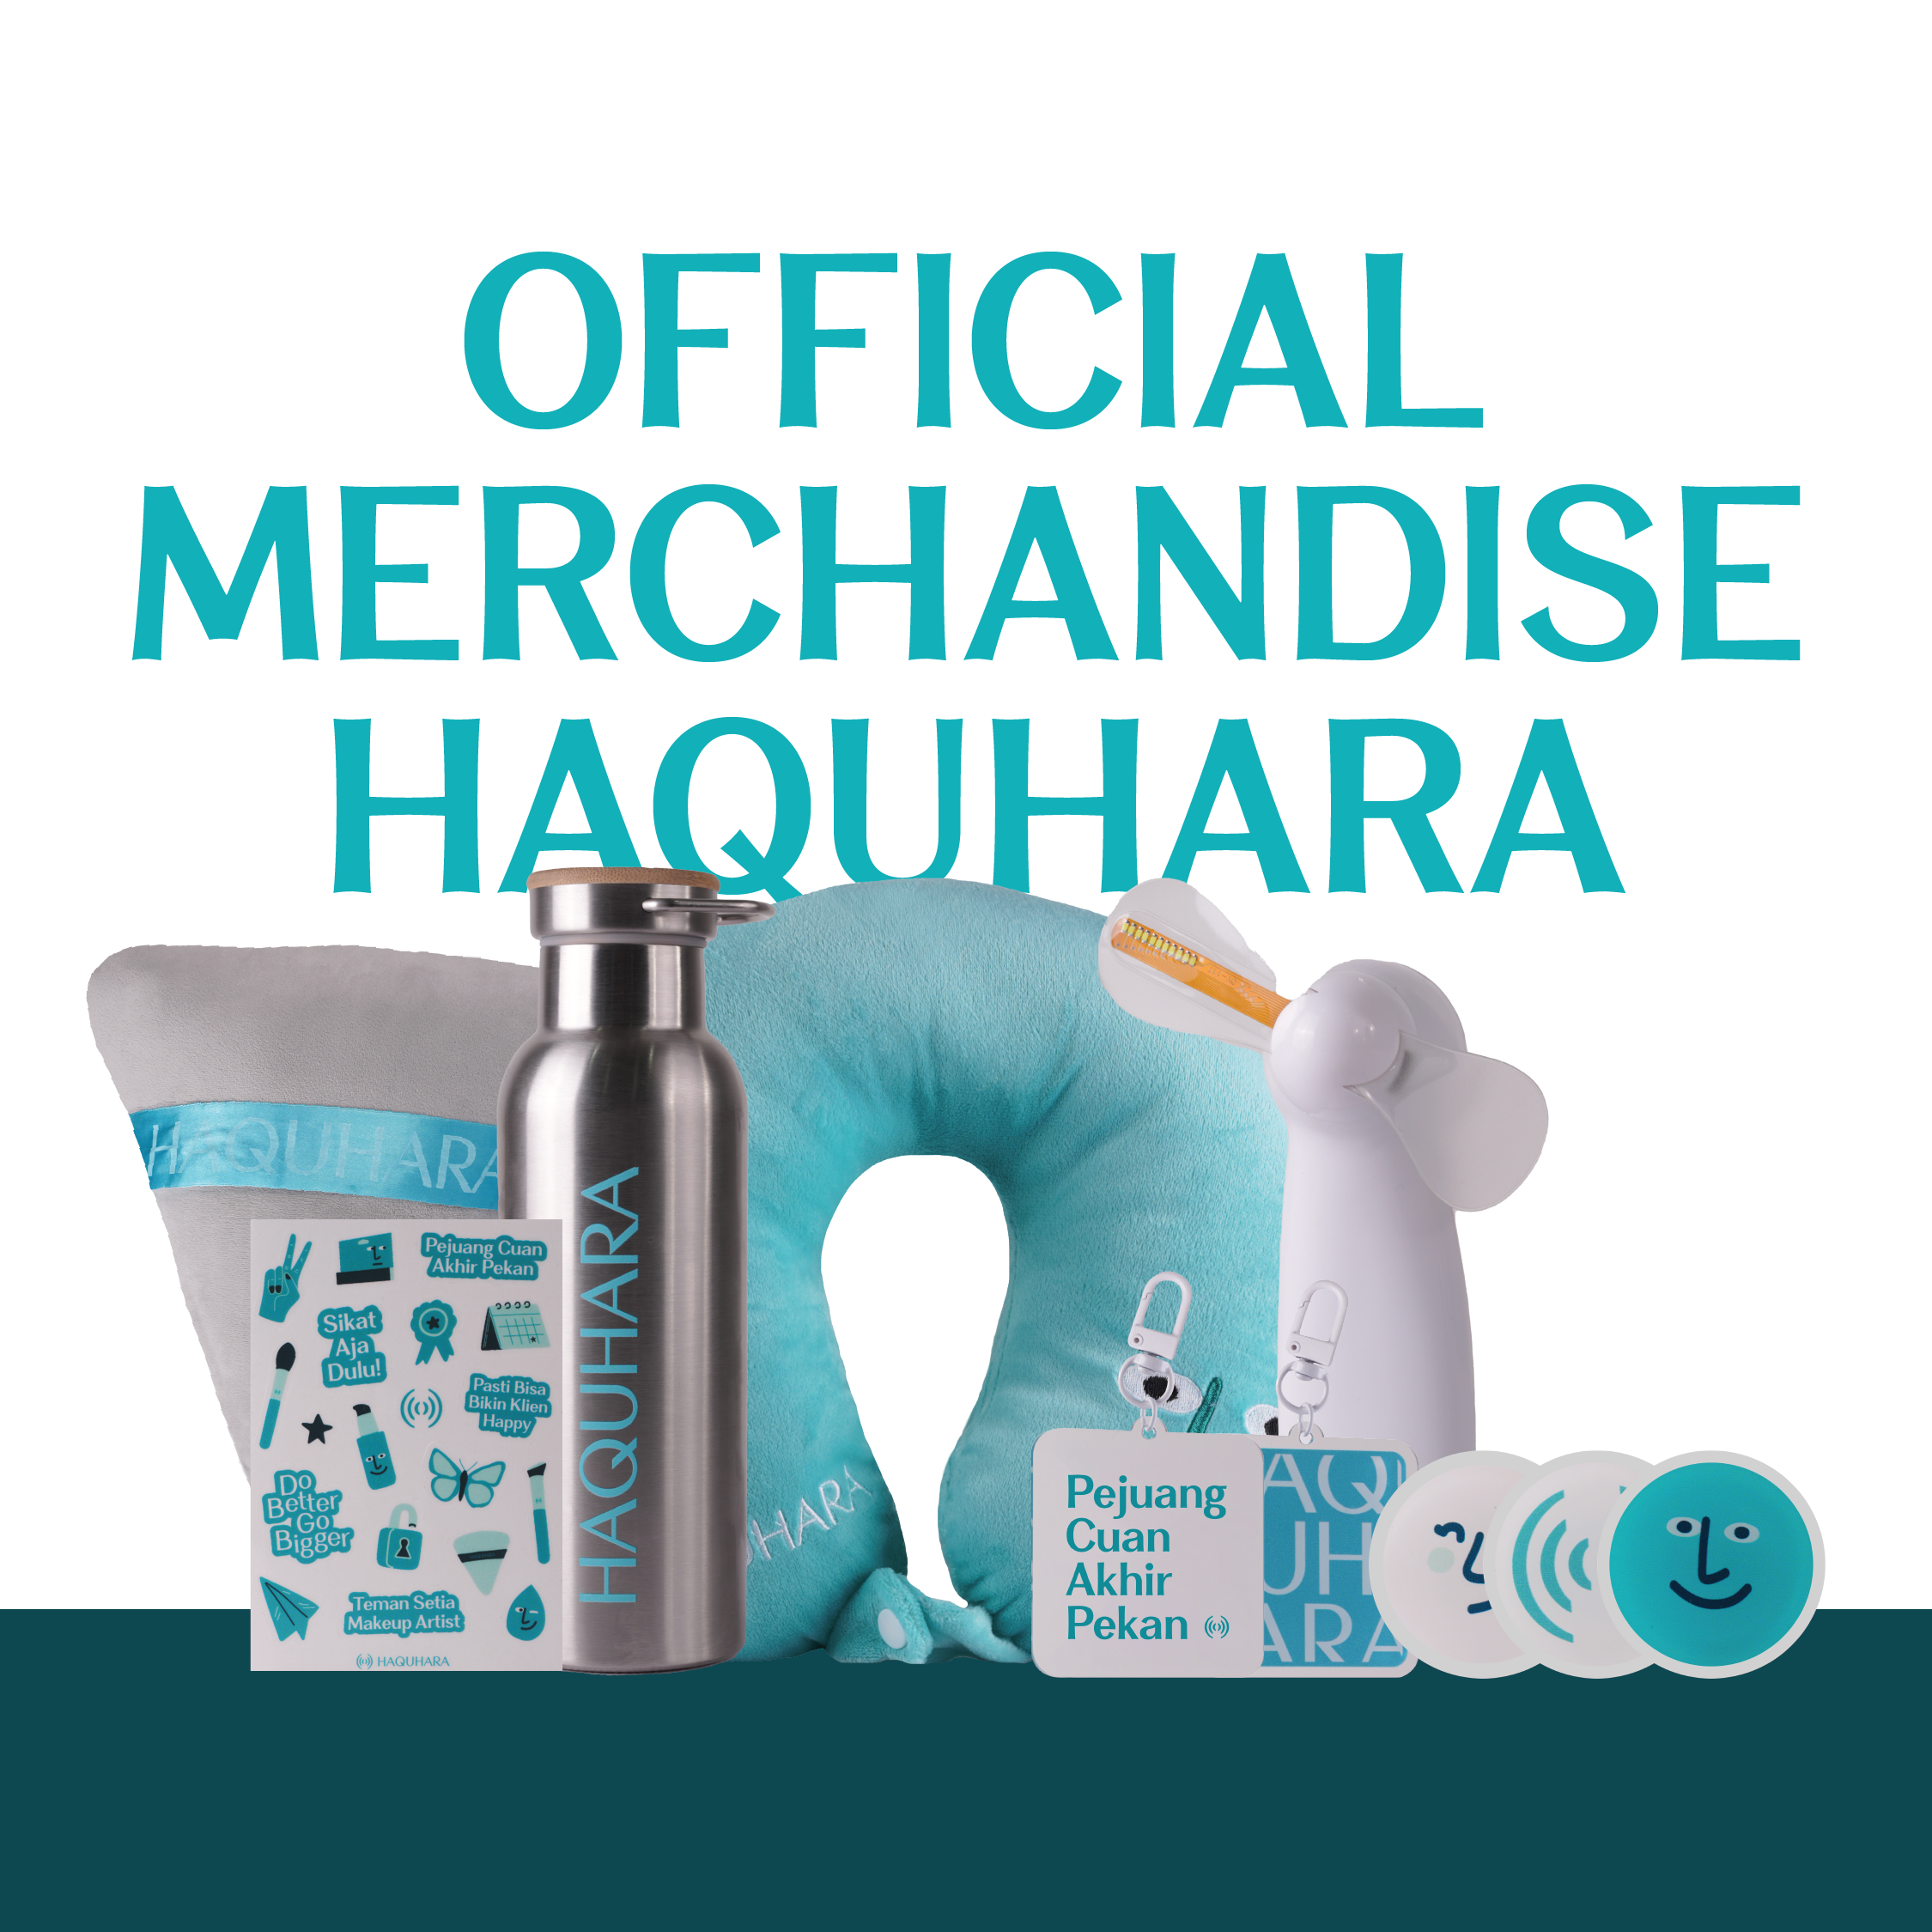 Official Merchandise Haquhara